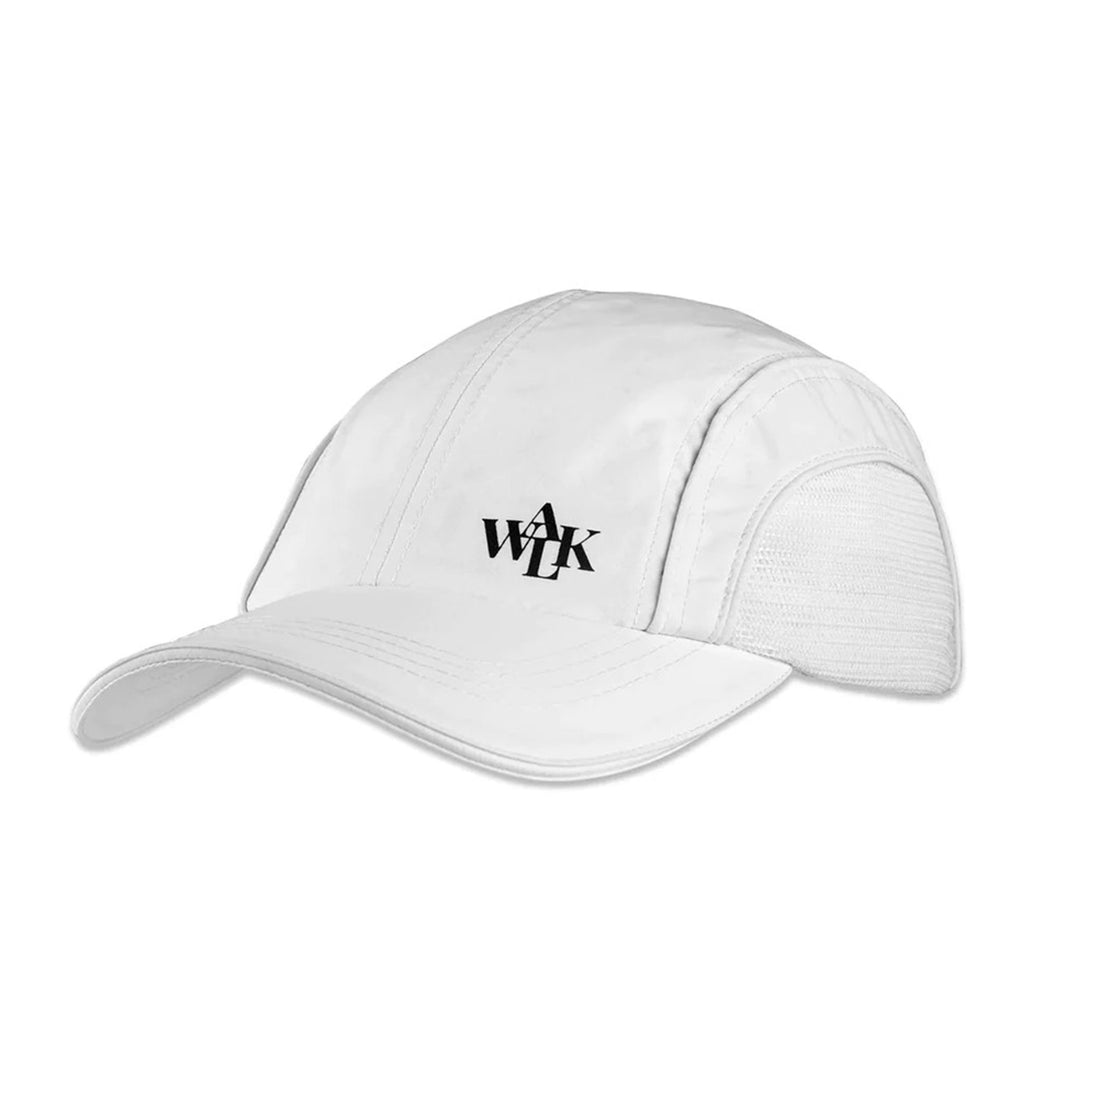 THE WHITE CAP